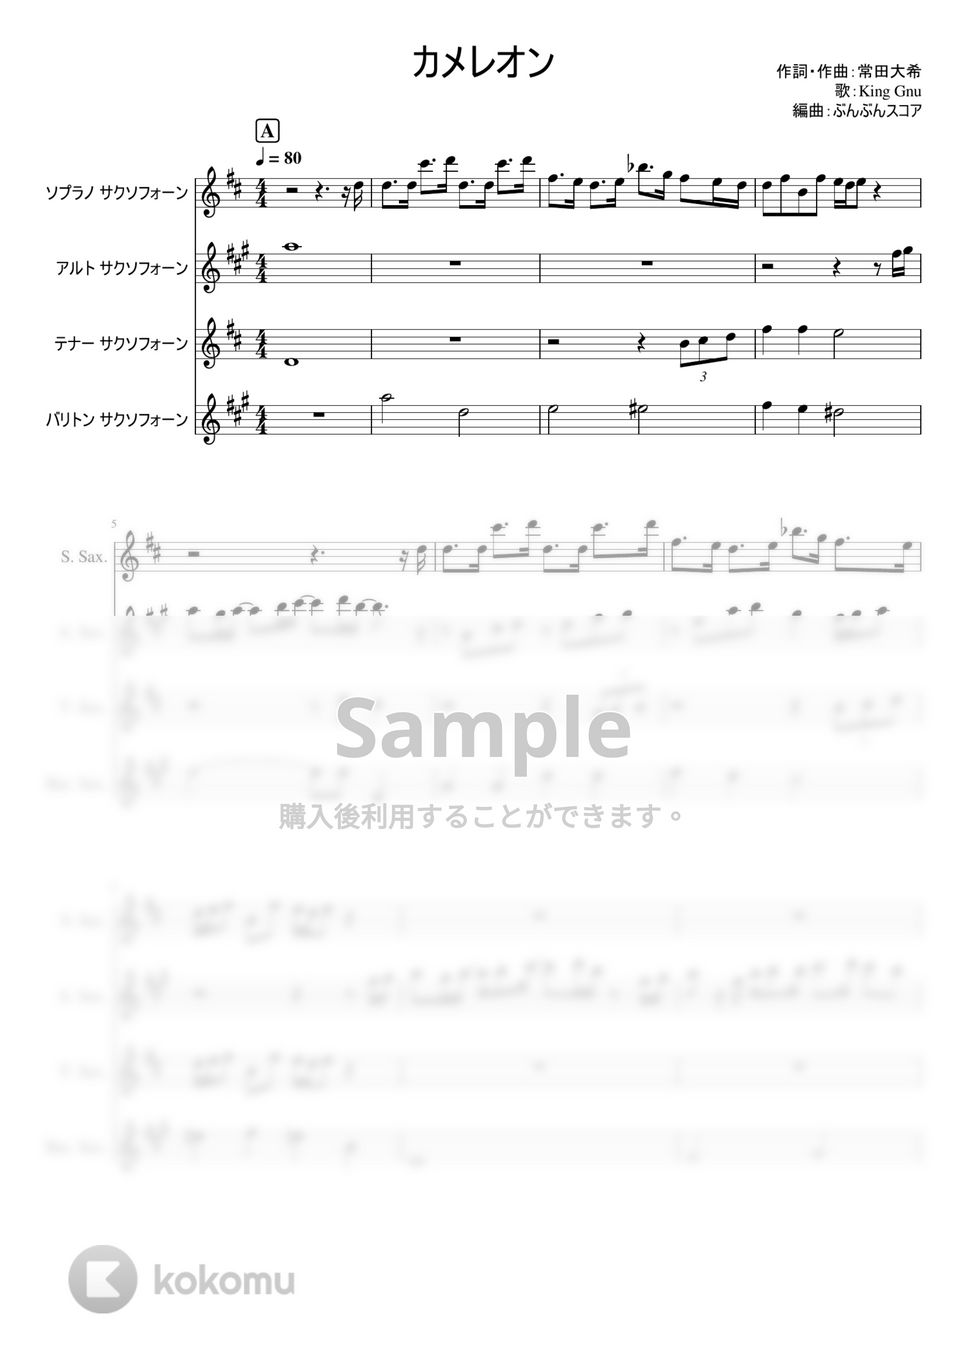 King Gnu - カメレオン (サックス四重奏/上級) by ぶんぶんスコア